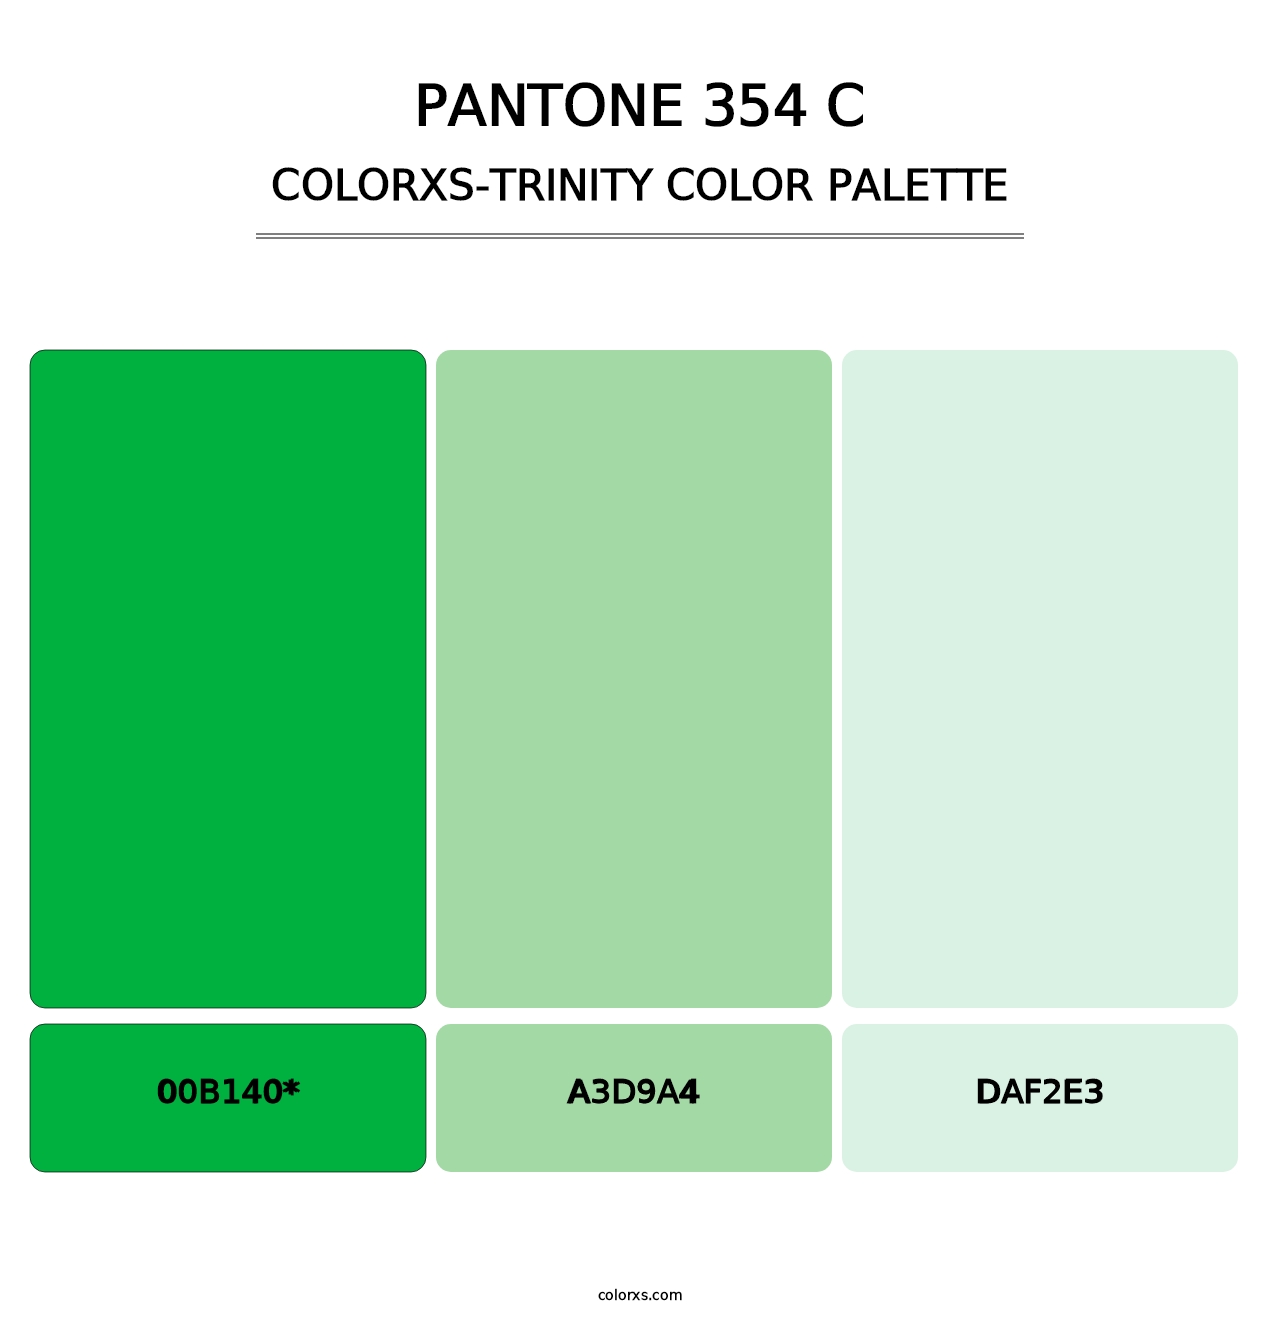 PANTONE 354 C - Colorxs Trinity Palette